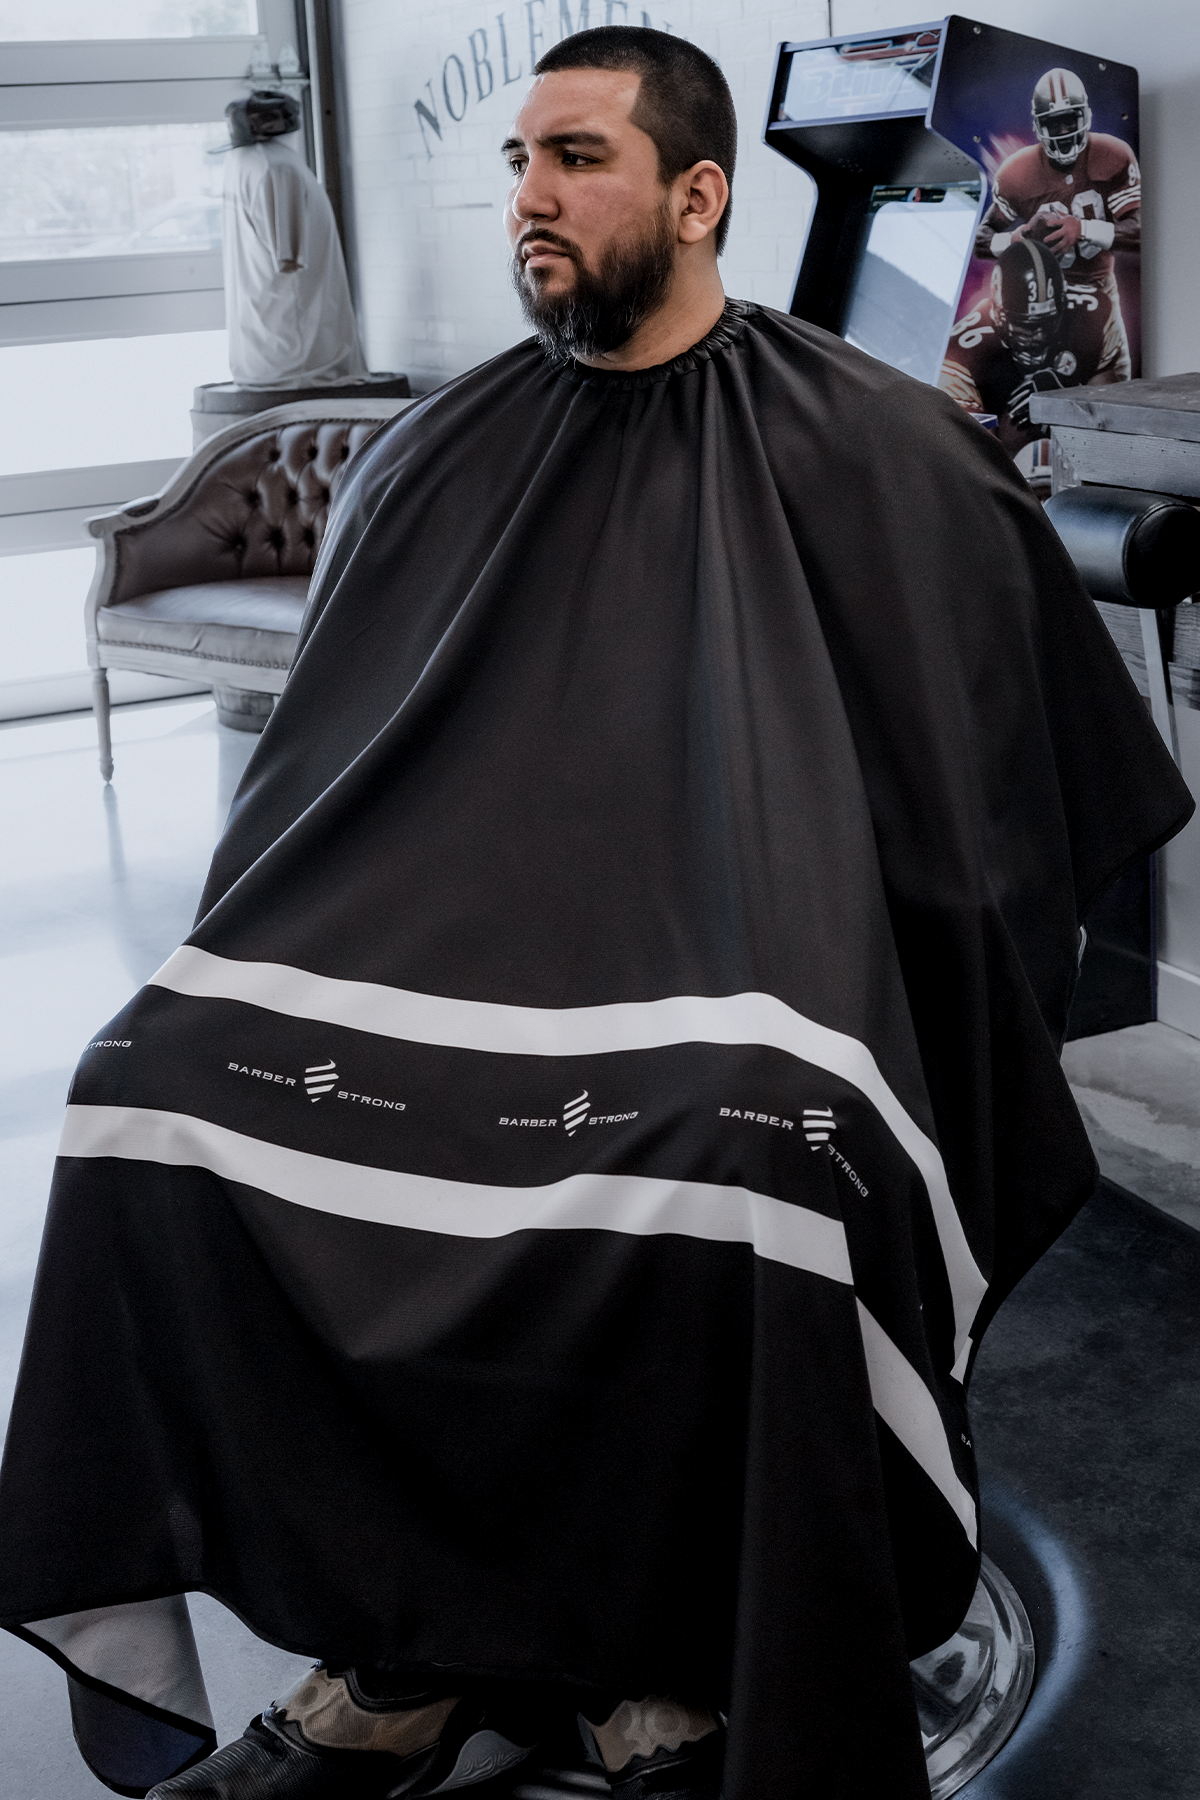 Barber/stylist Cape Big GG